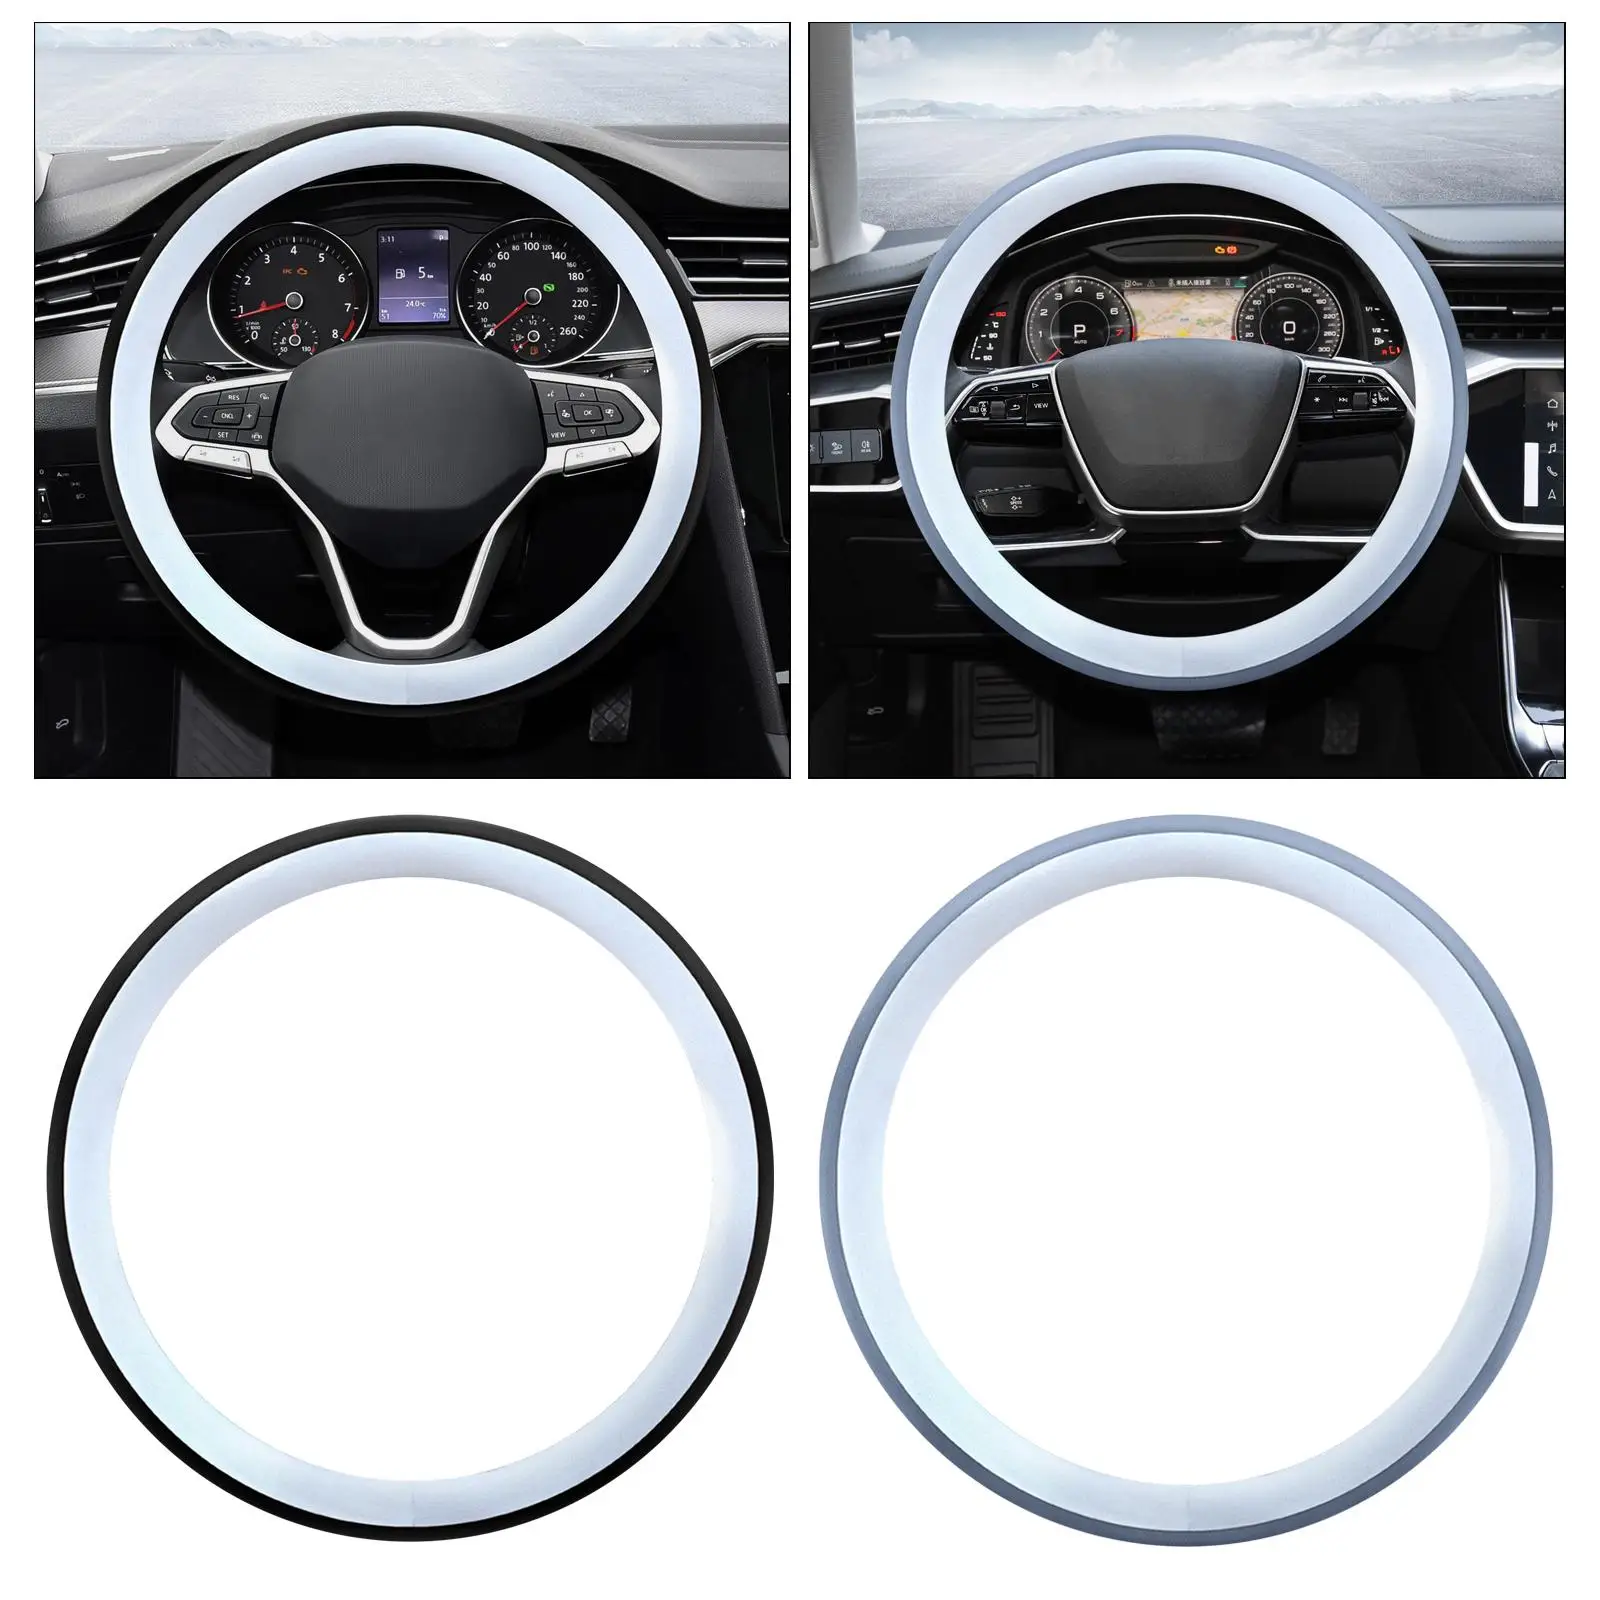 38cm Car Steering Wheel Cover for Suvs Trucks Lightweight Interior Accessories Protection Anti Slip Four Seasons Use Short Plush